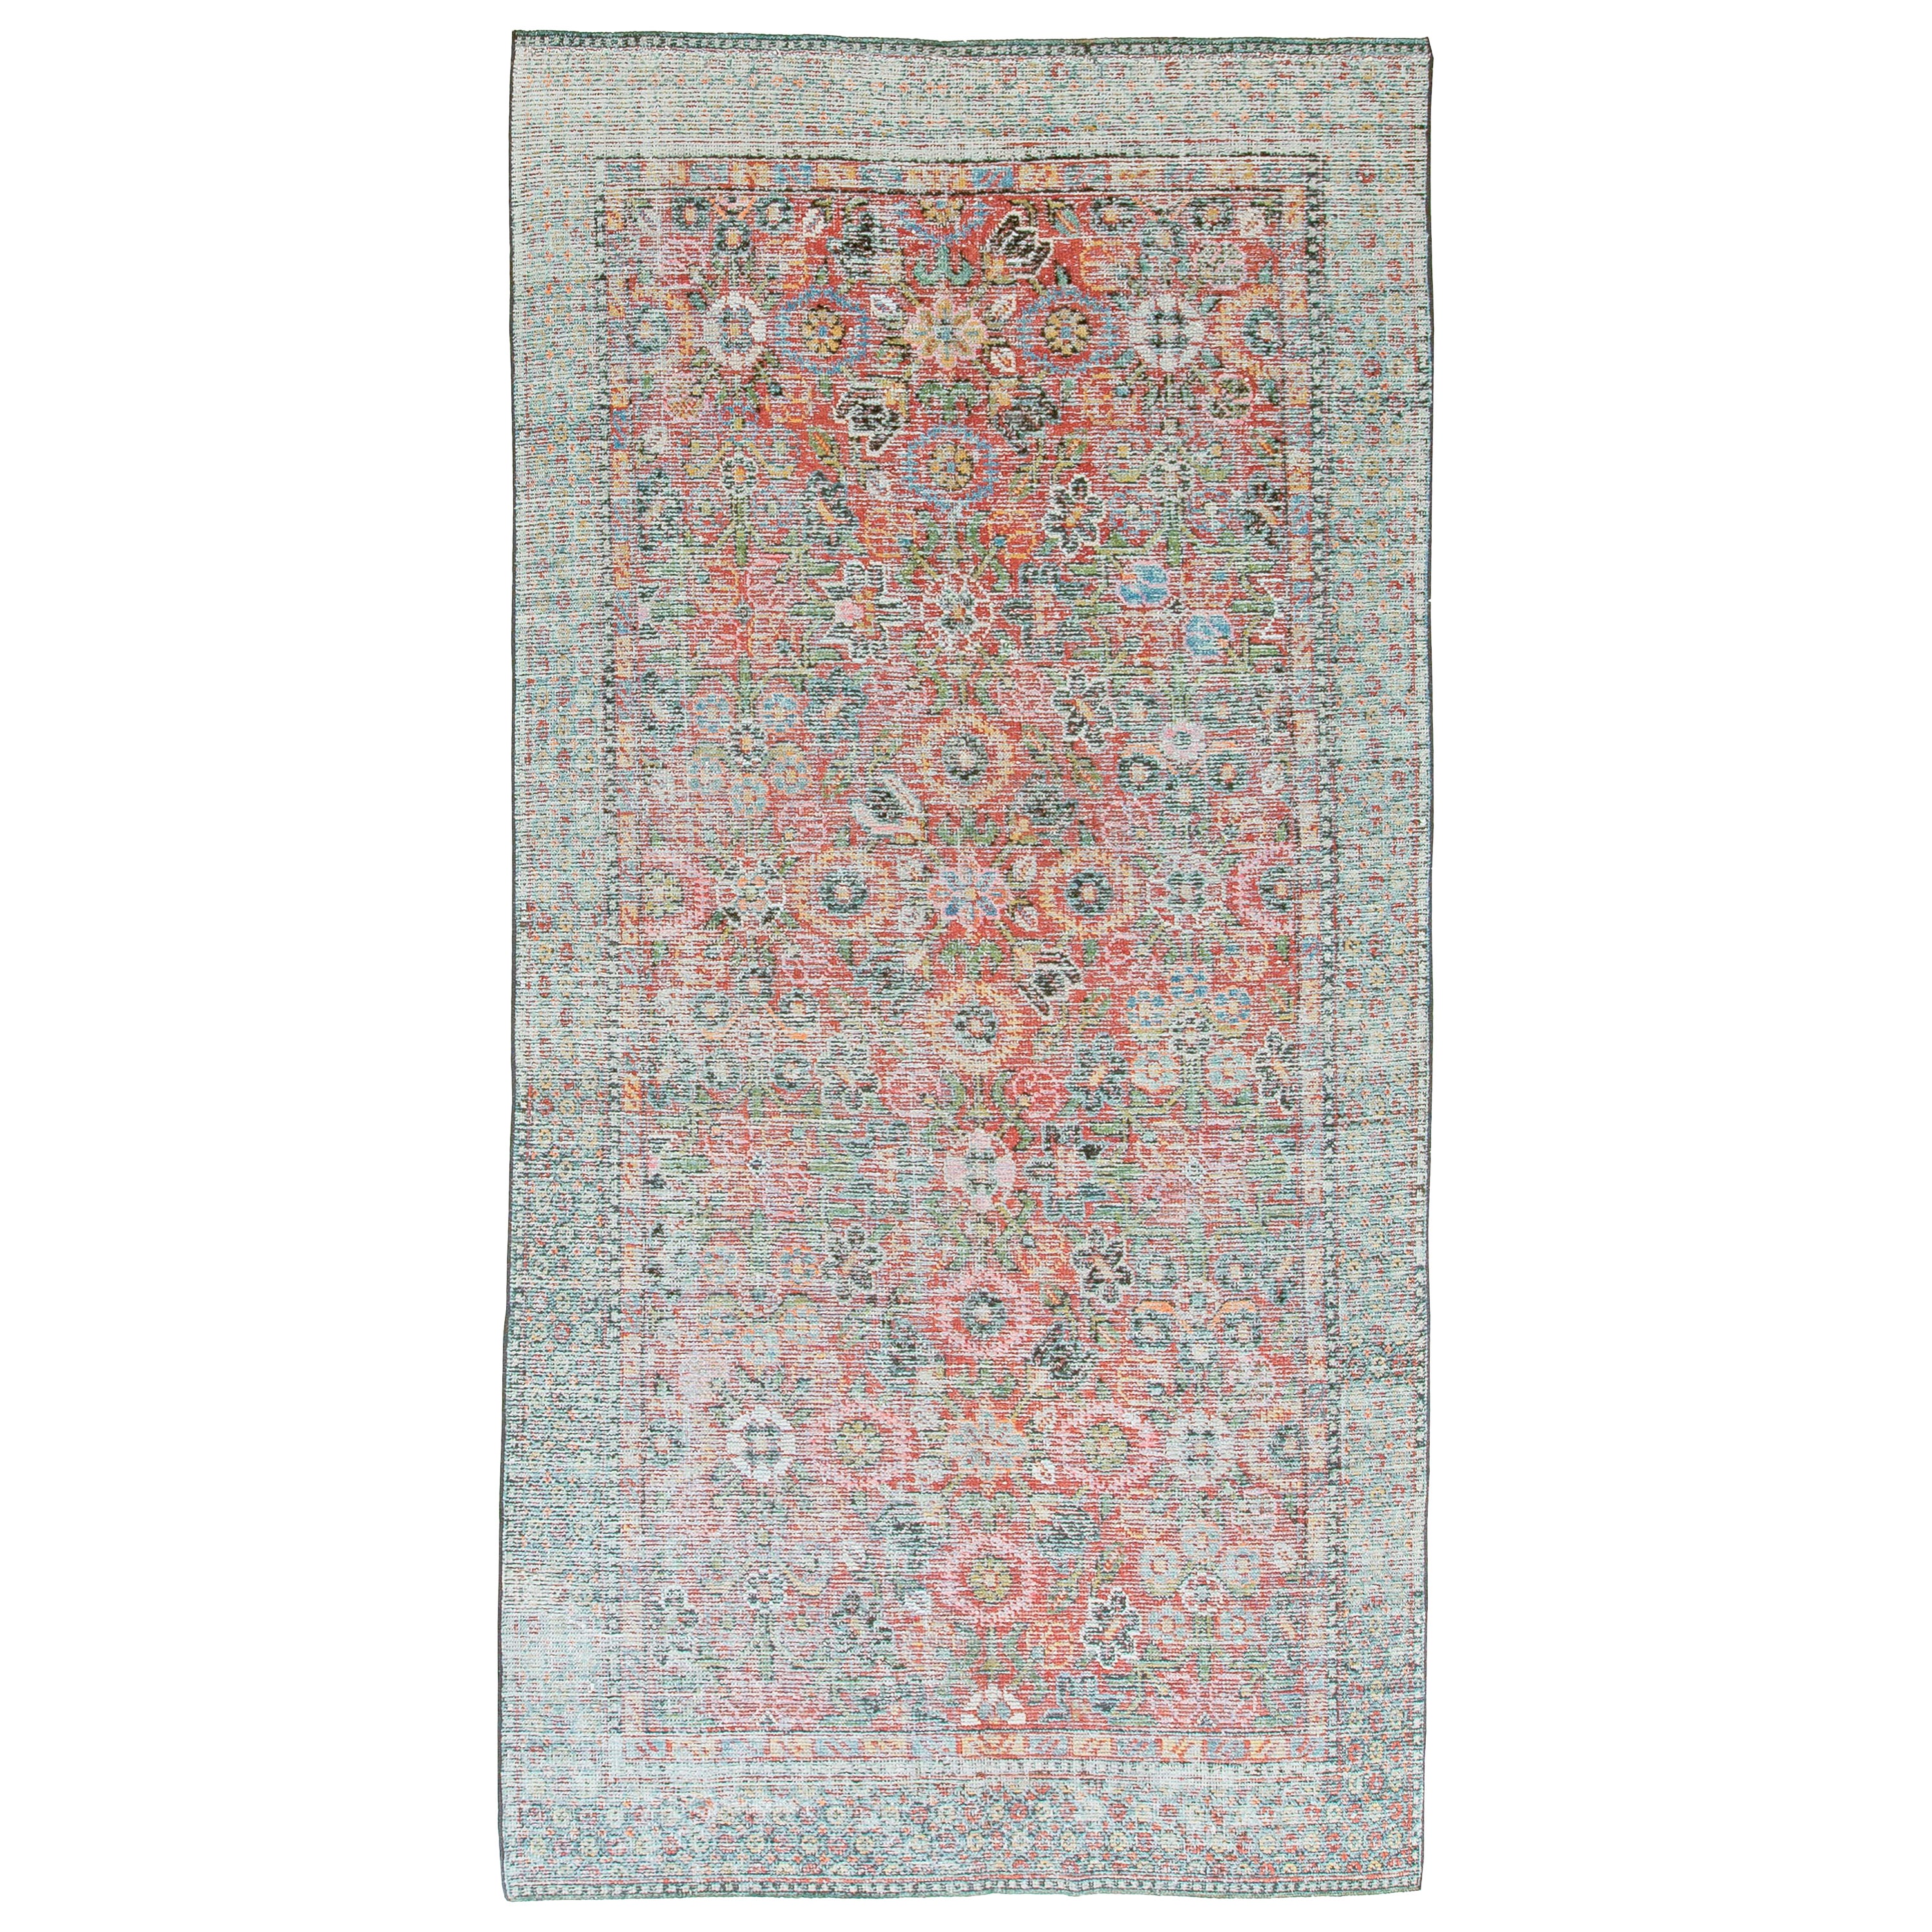 Authentic 1850s Samarkand Handmade Silk Rug For Sale